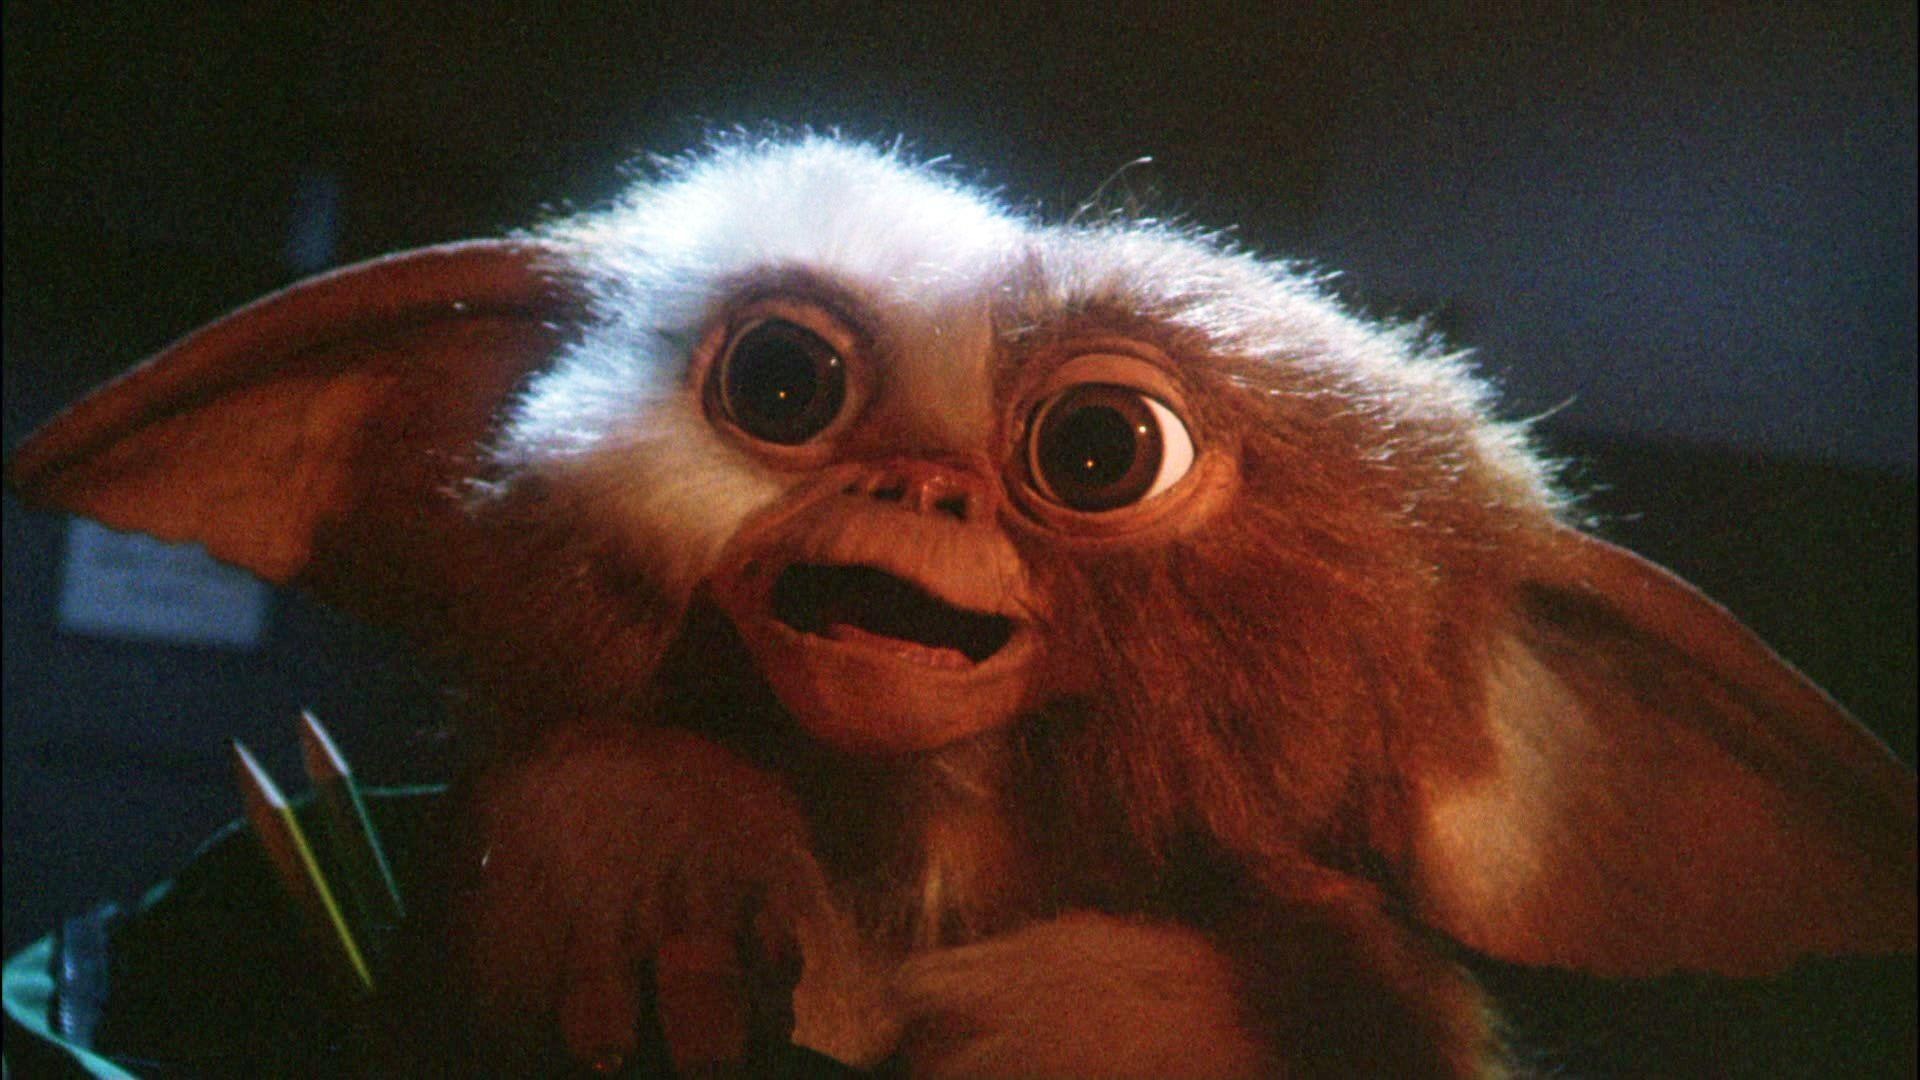 Gremlin: Gizmo, A small, furry creature called a mogwai, 1984 movie. 1920x1080 Full HD Background.